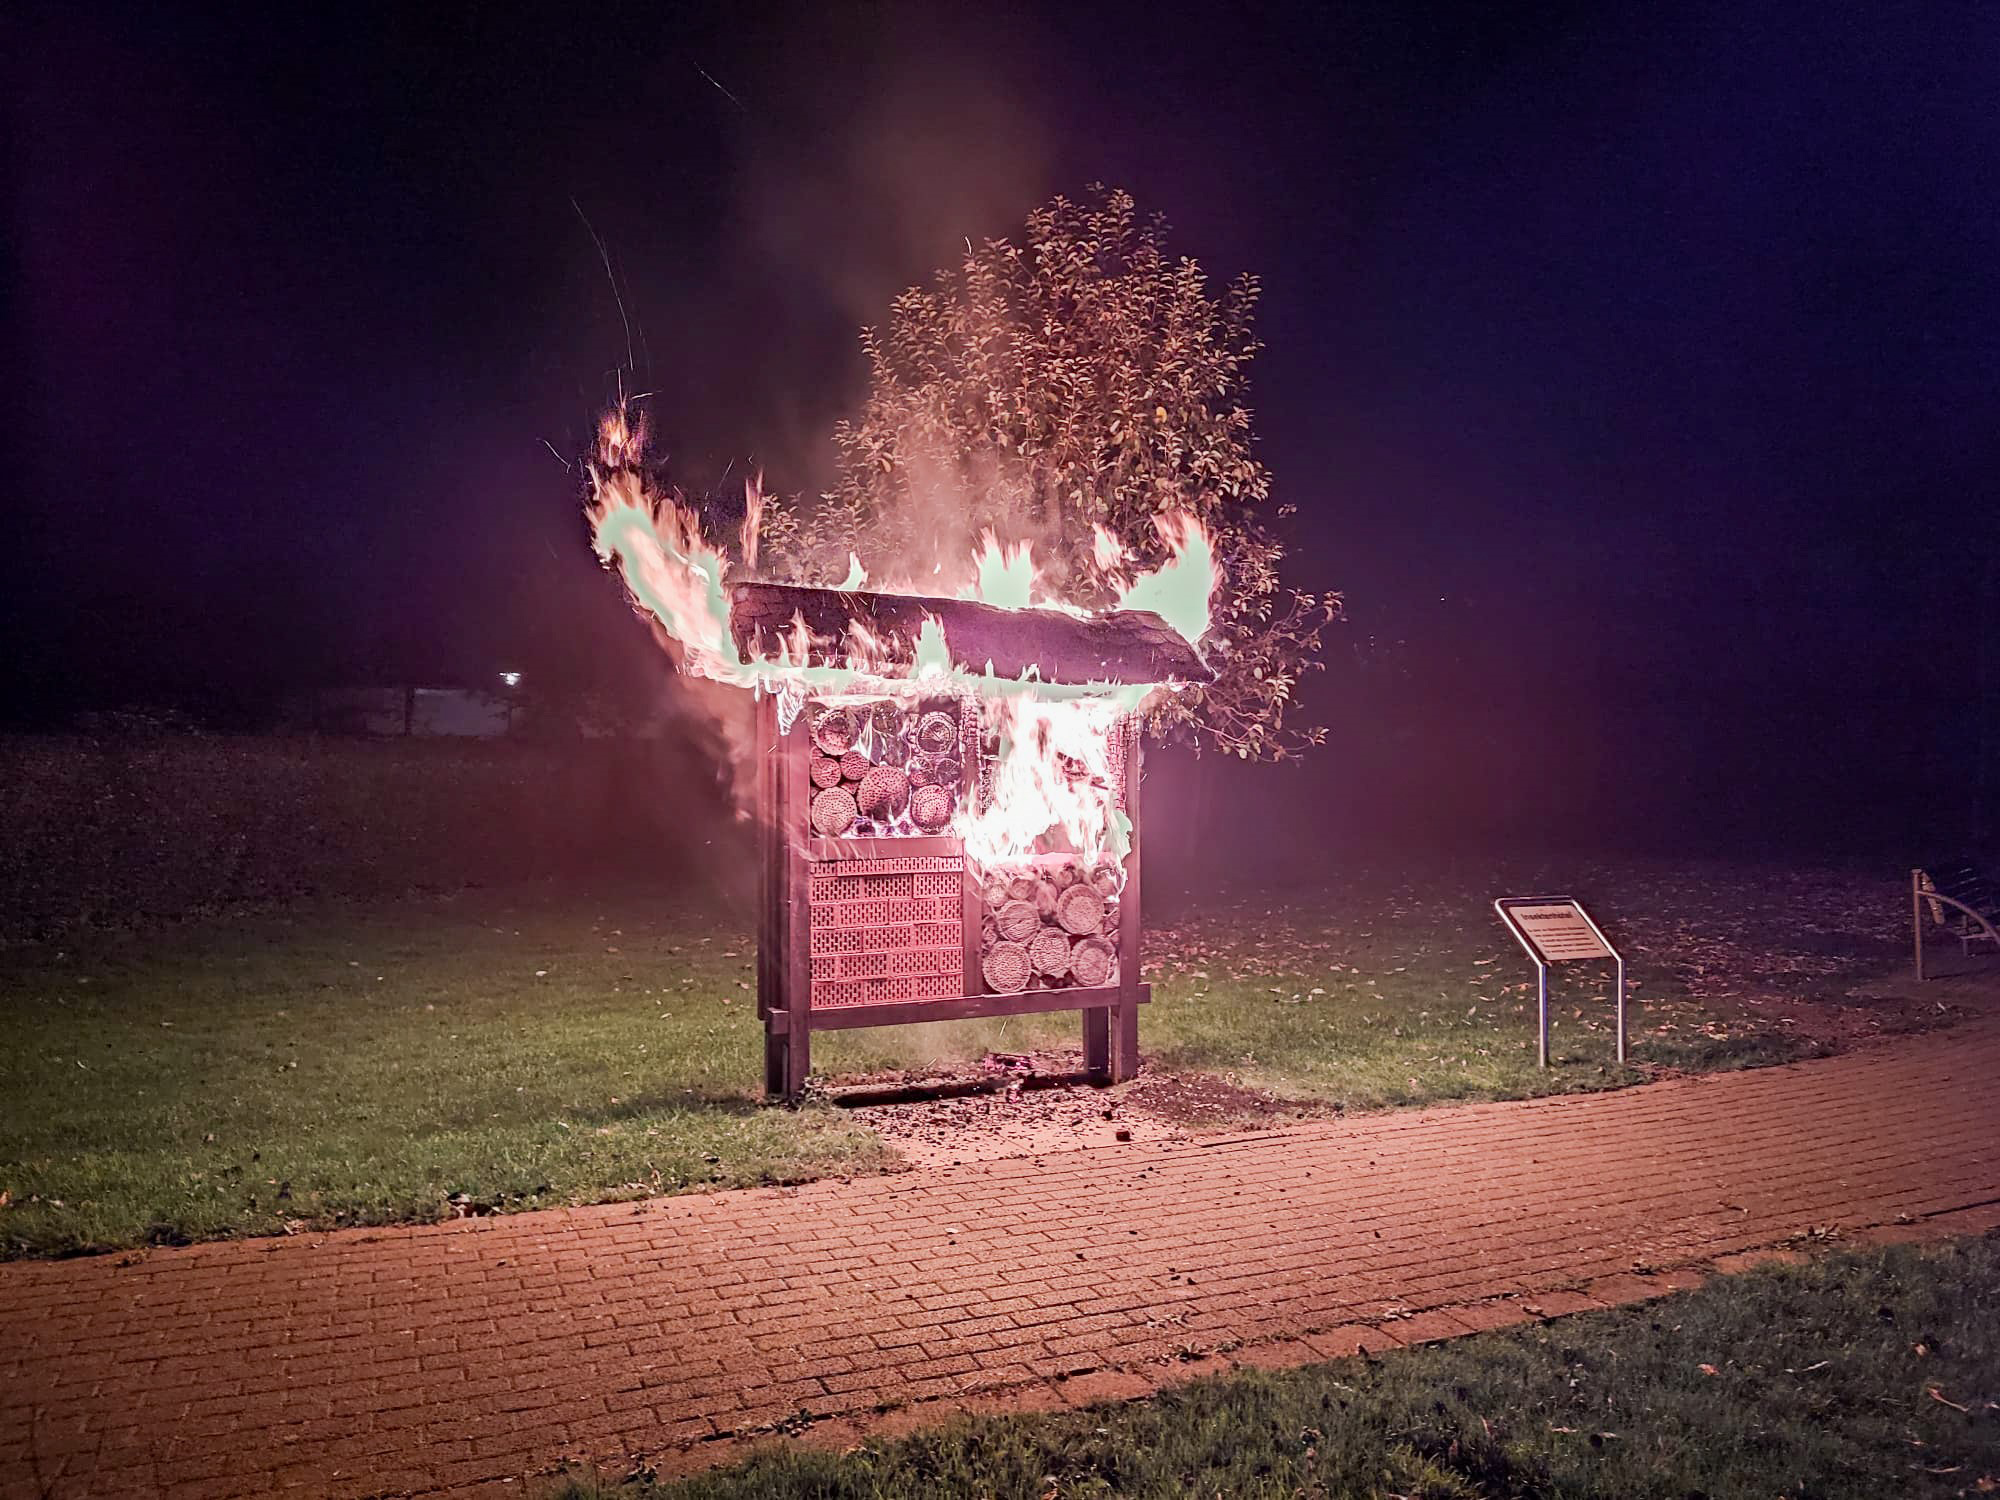 Insektenhotel in Kamen in Brand gesetzt